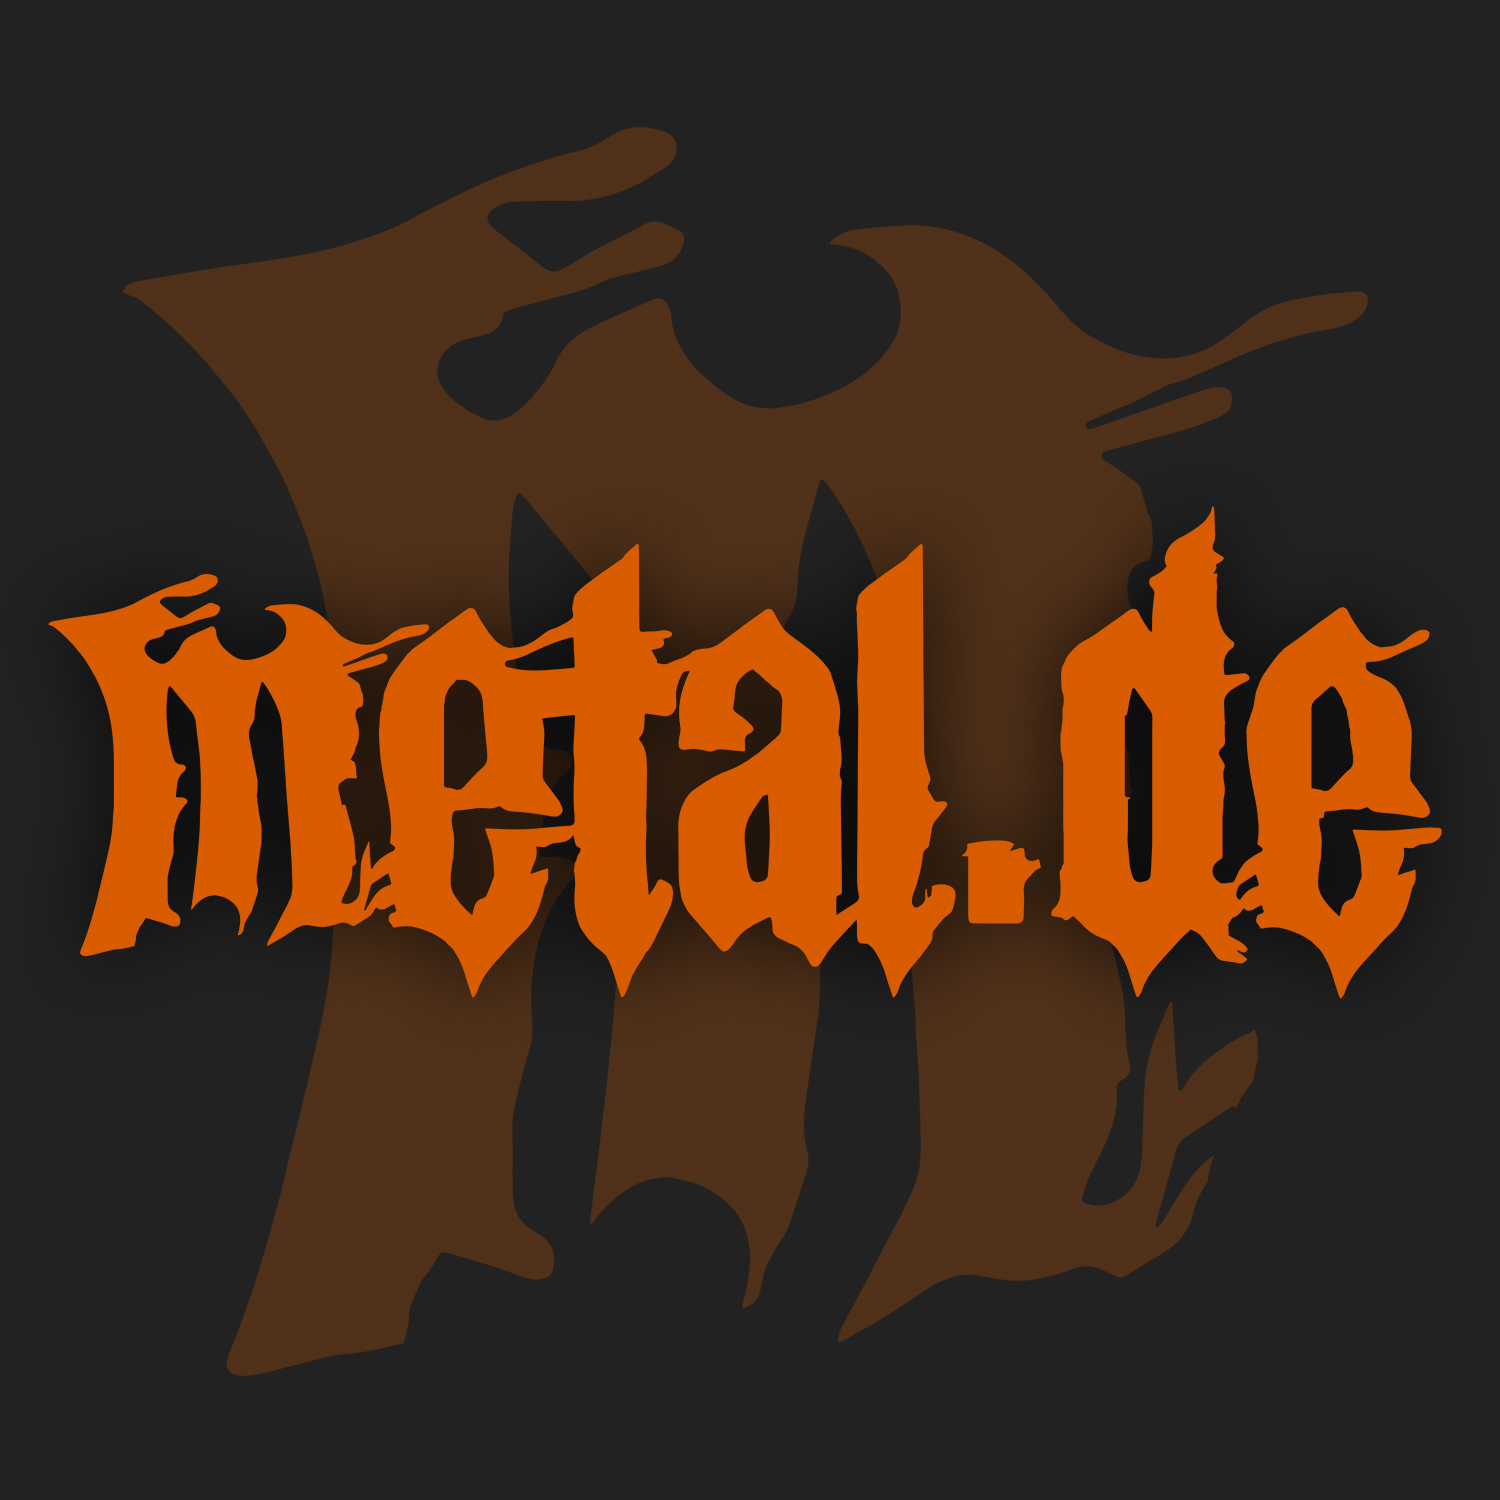 www.metal.de